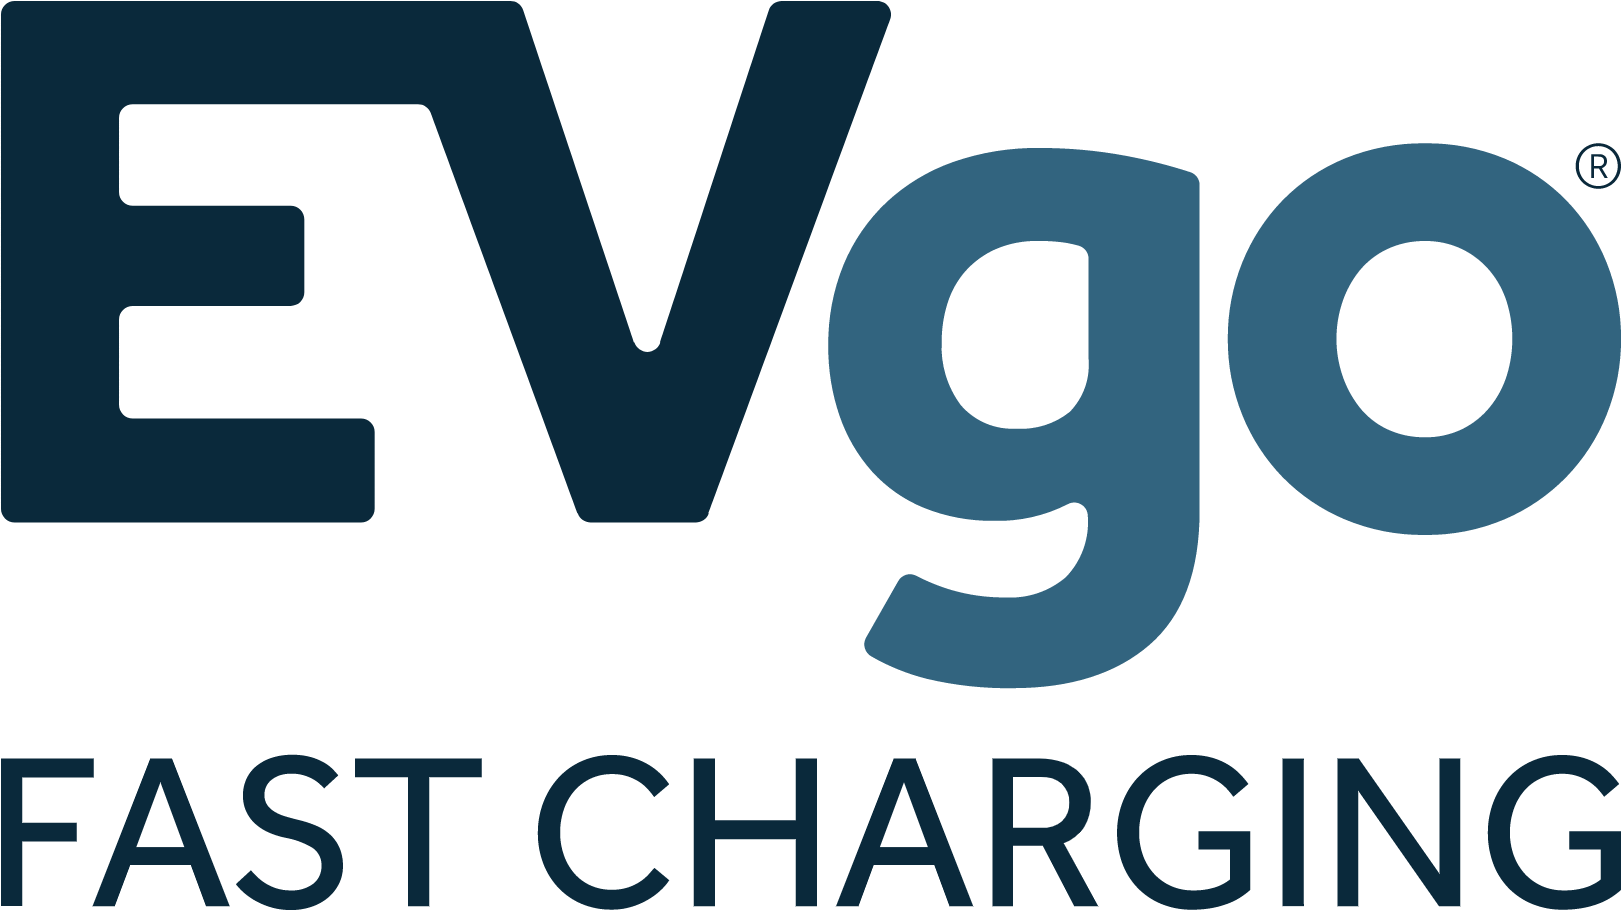 EVgo logo large (transparent PNG)